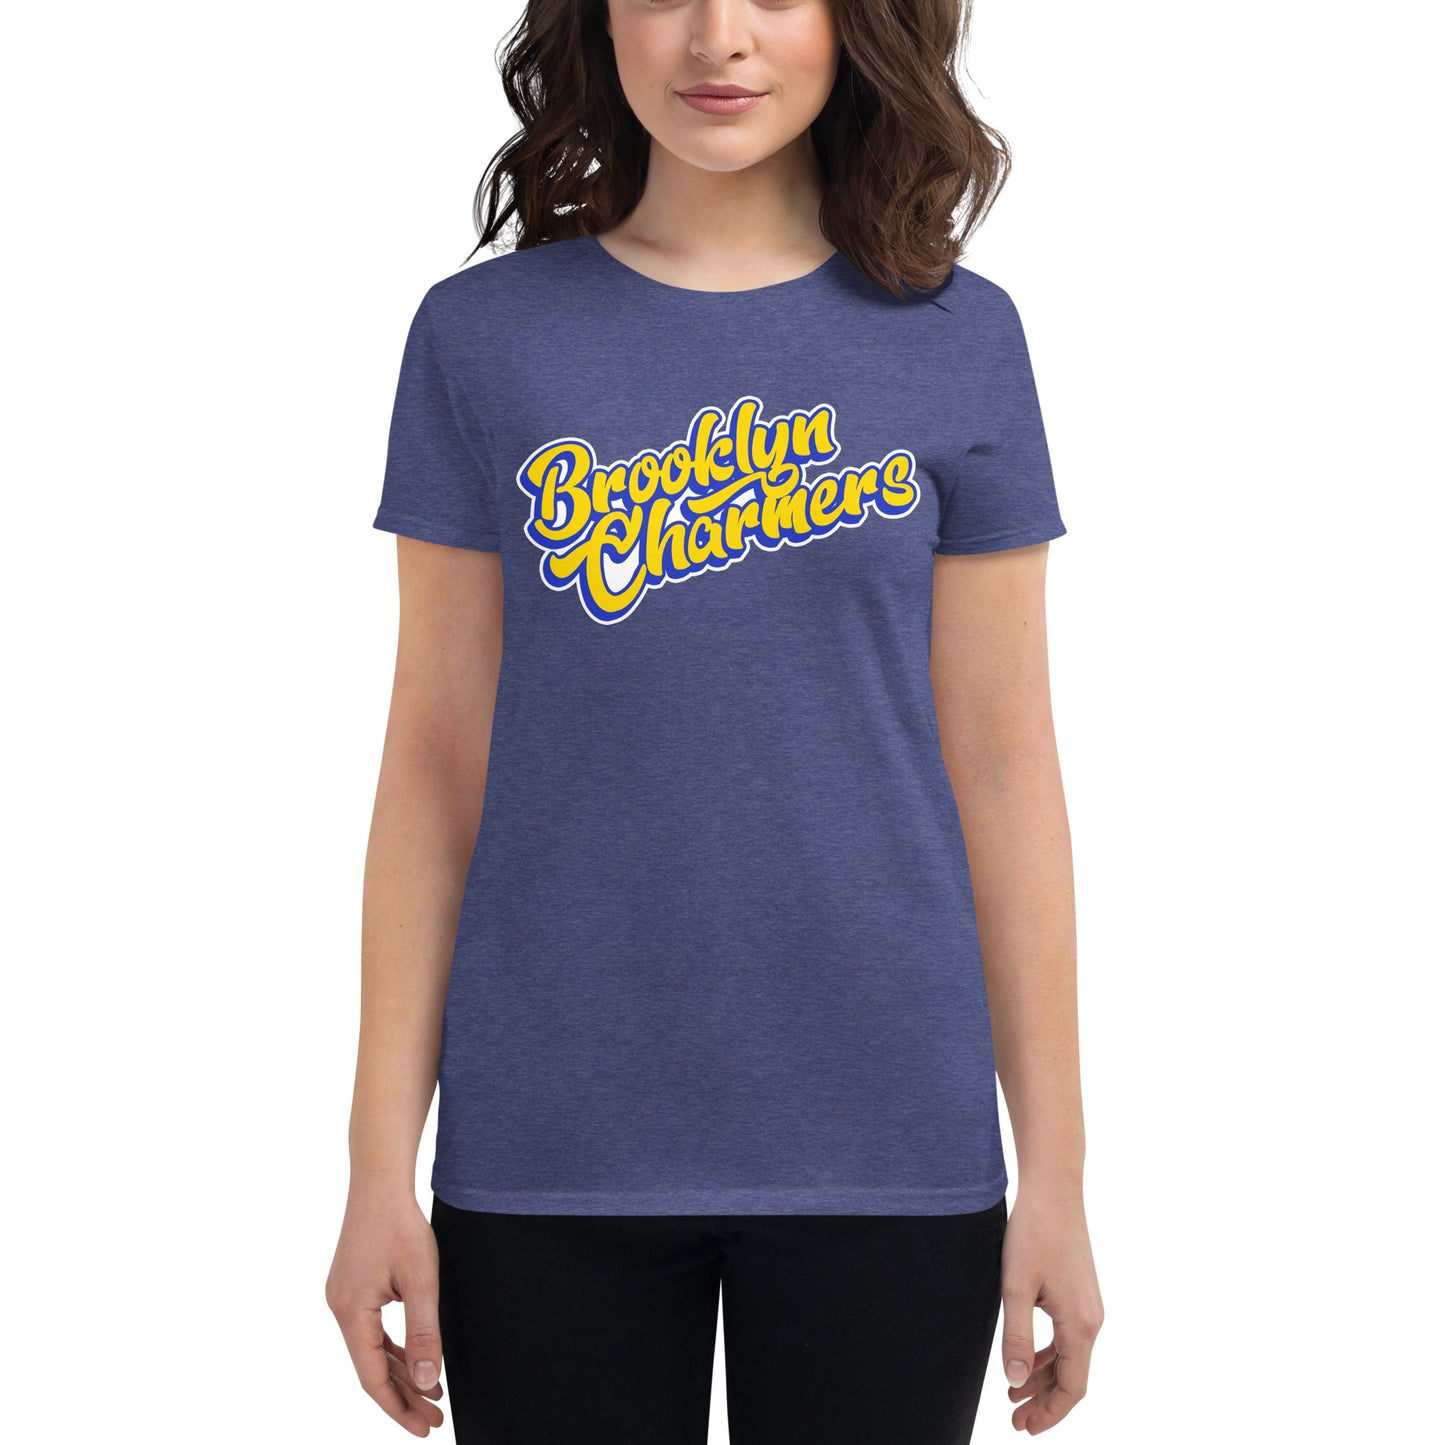 Brooklyn Charmers "THRILL" Women's T-Shirt